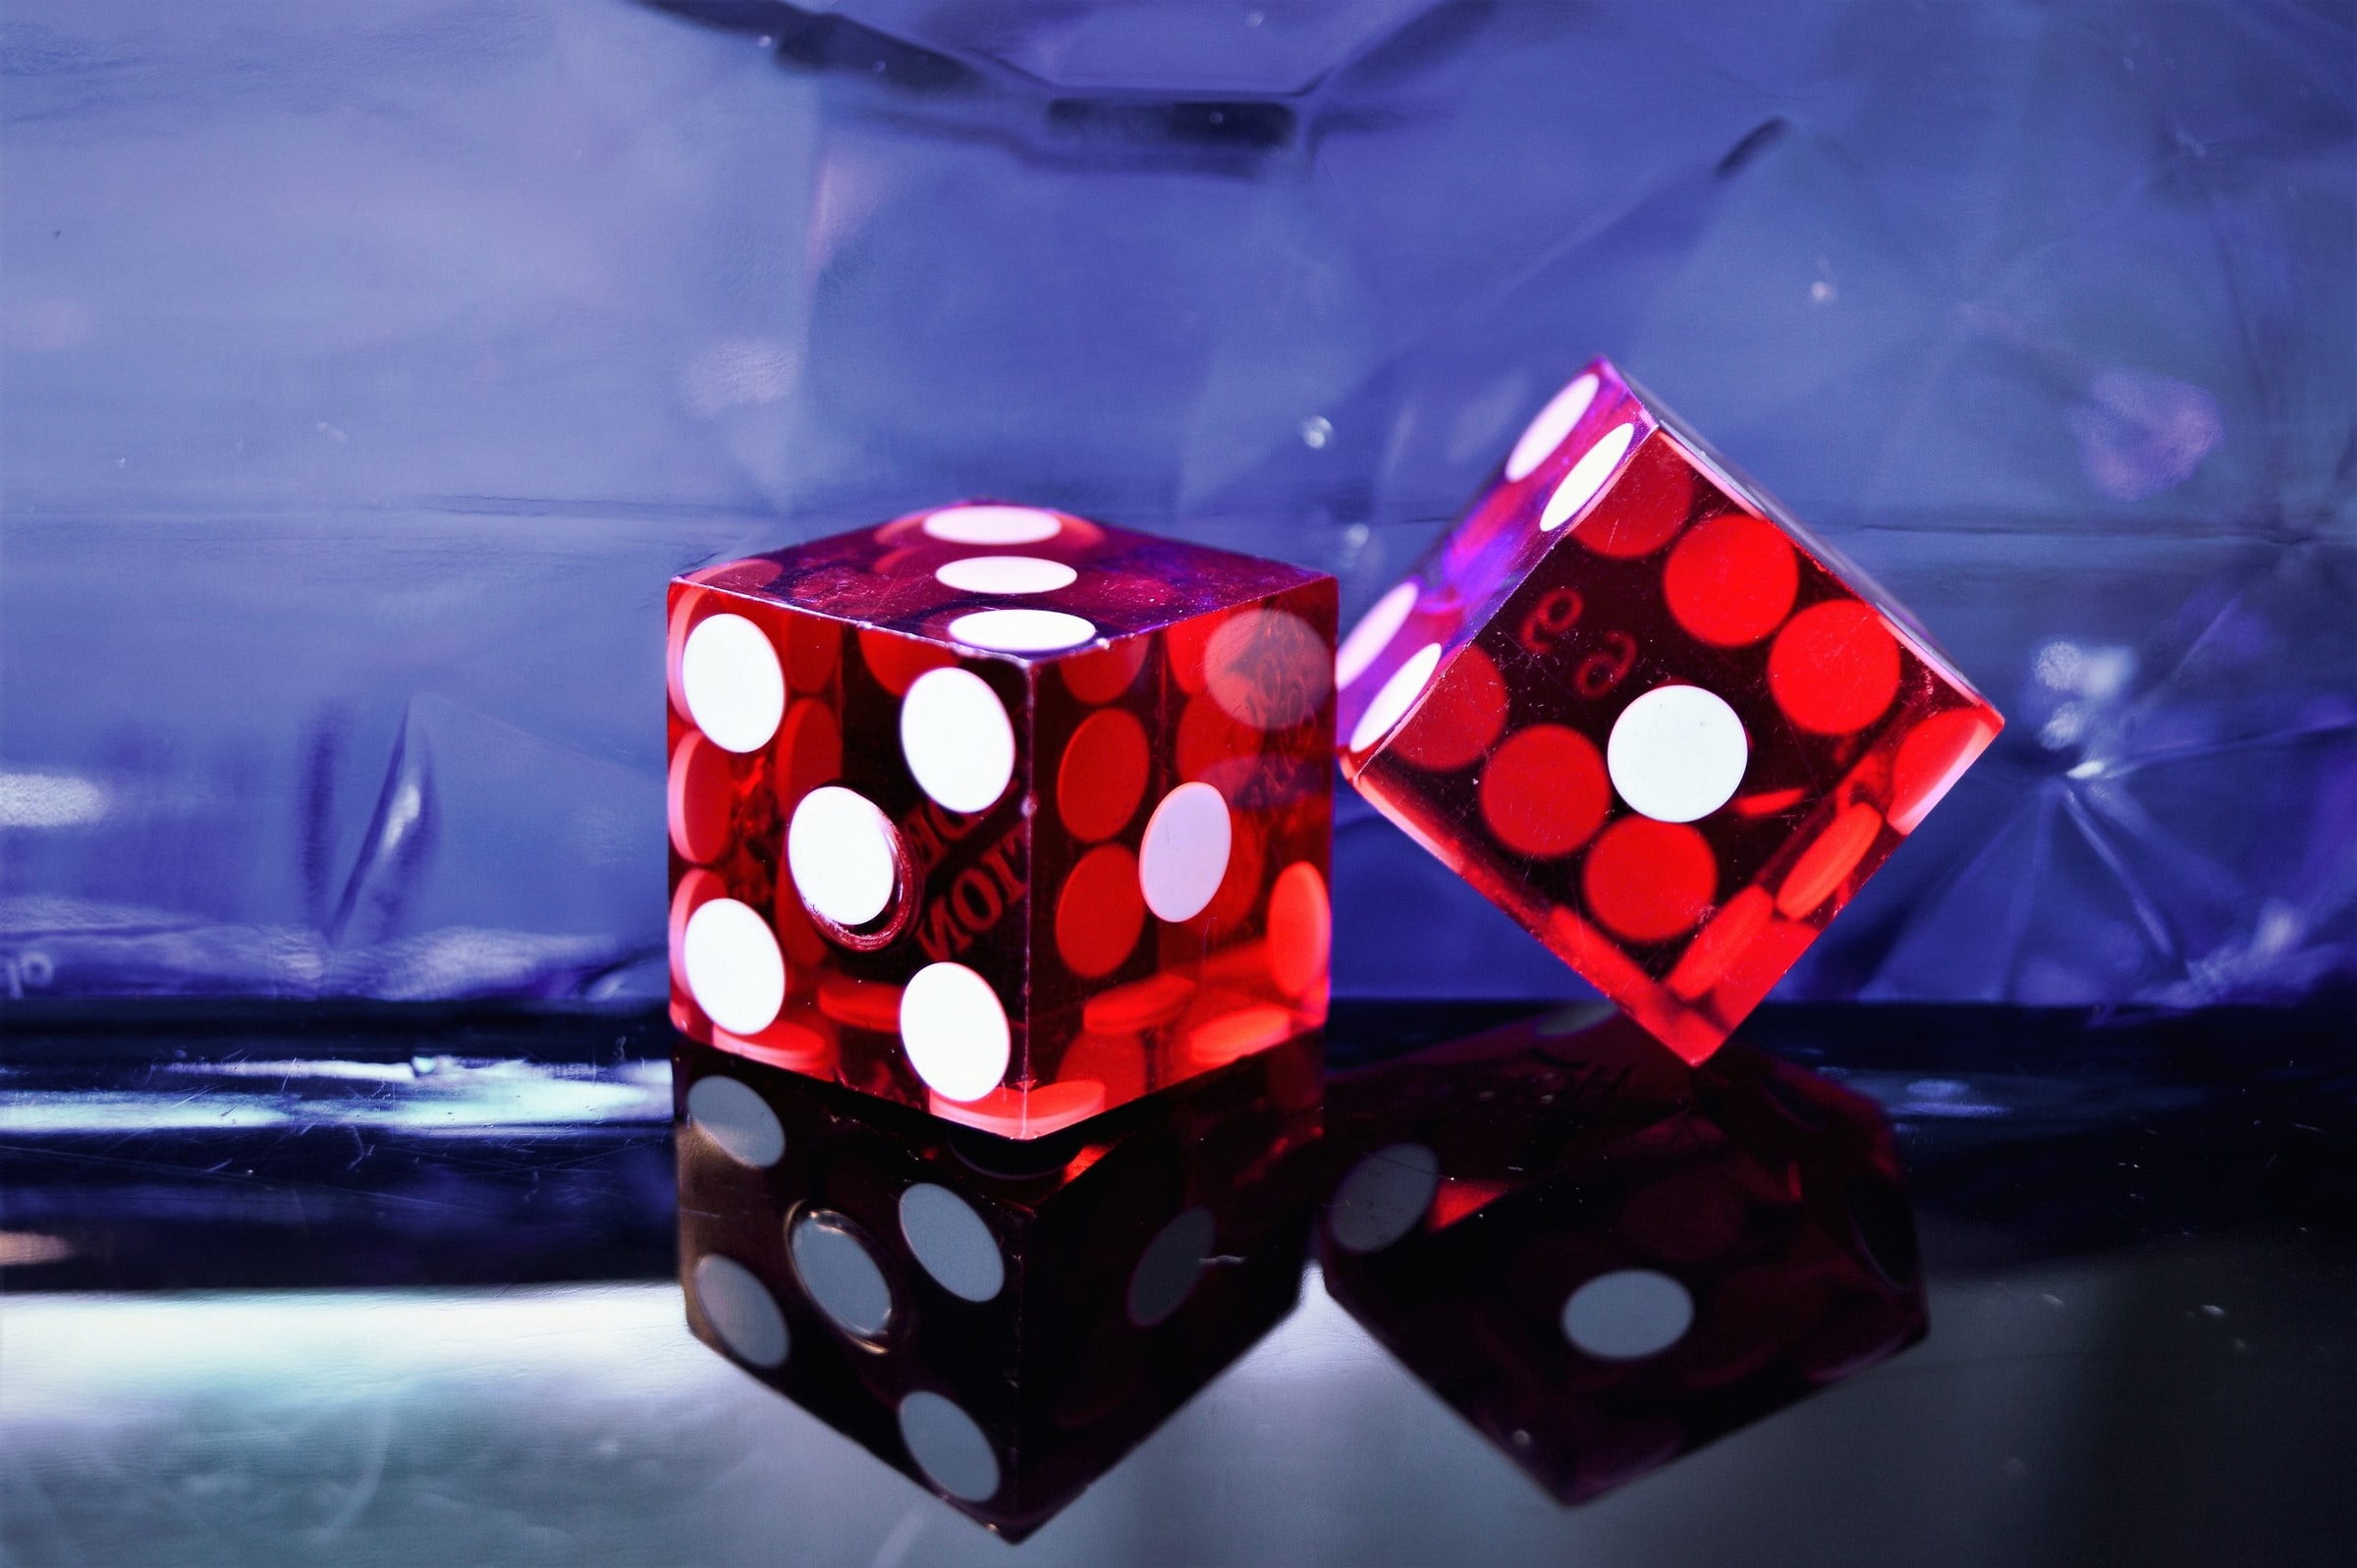 AGS and BetMGM Sign Casino Gaming Partnership